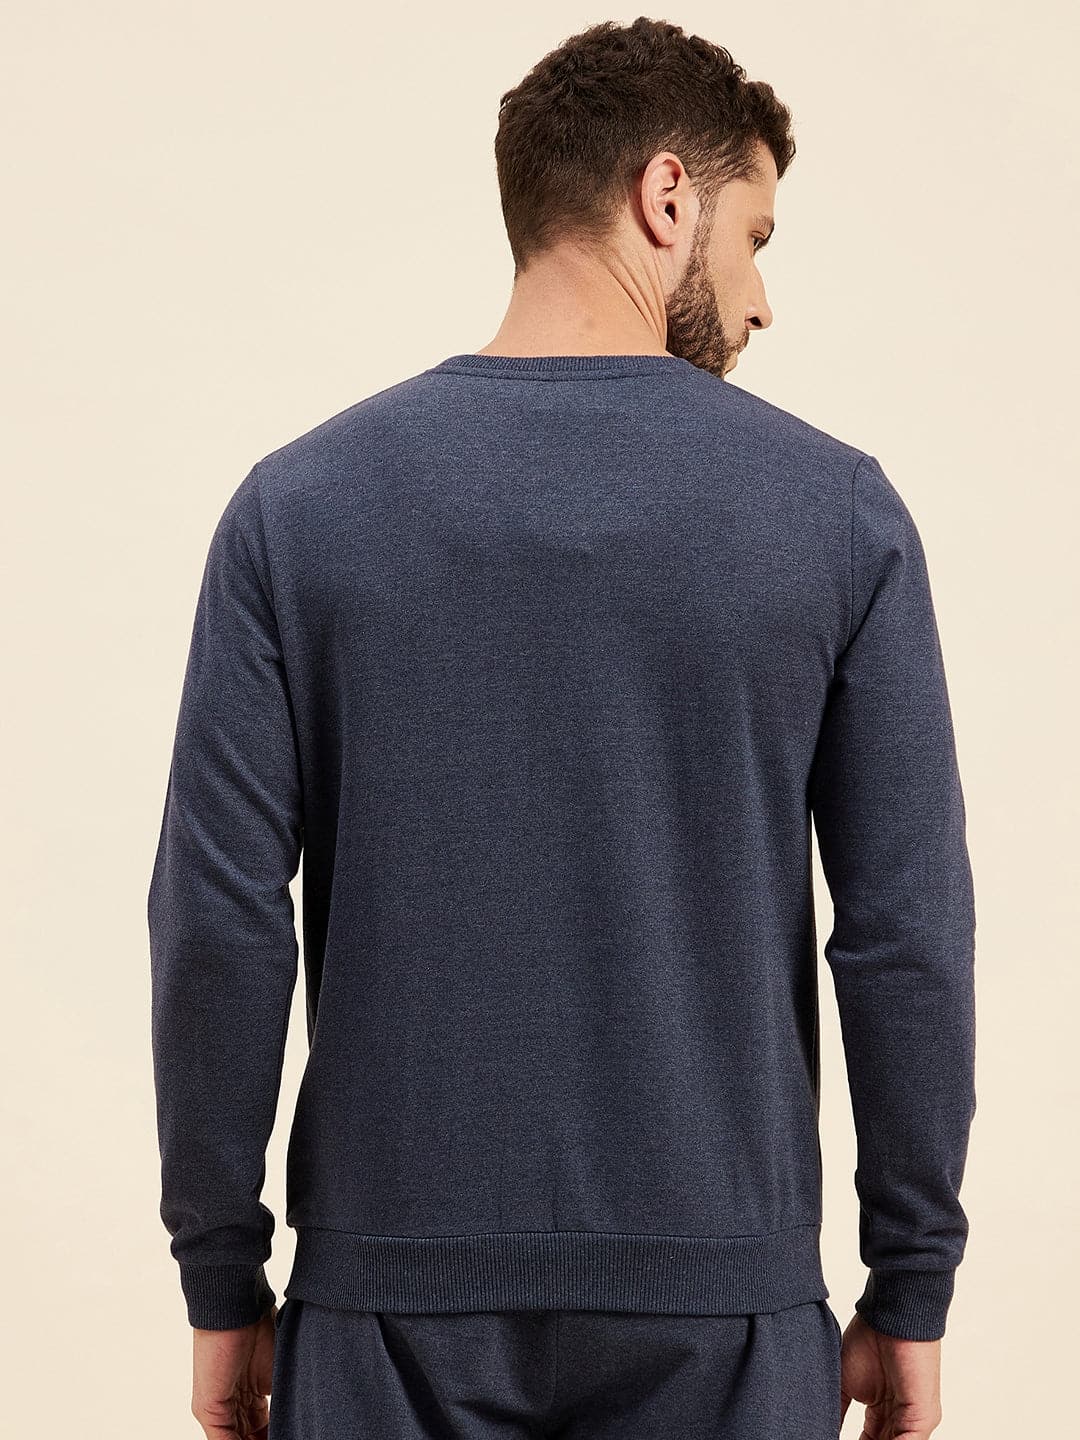 Men's Blue Melange Foil Print Sweatshirt - LYUSH-MASCLN